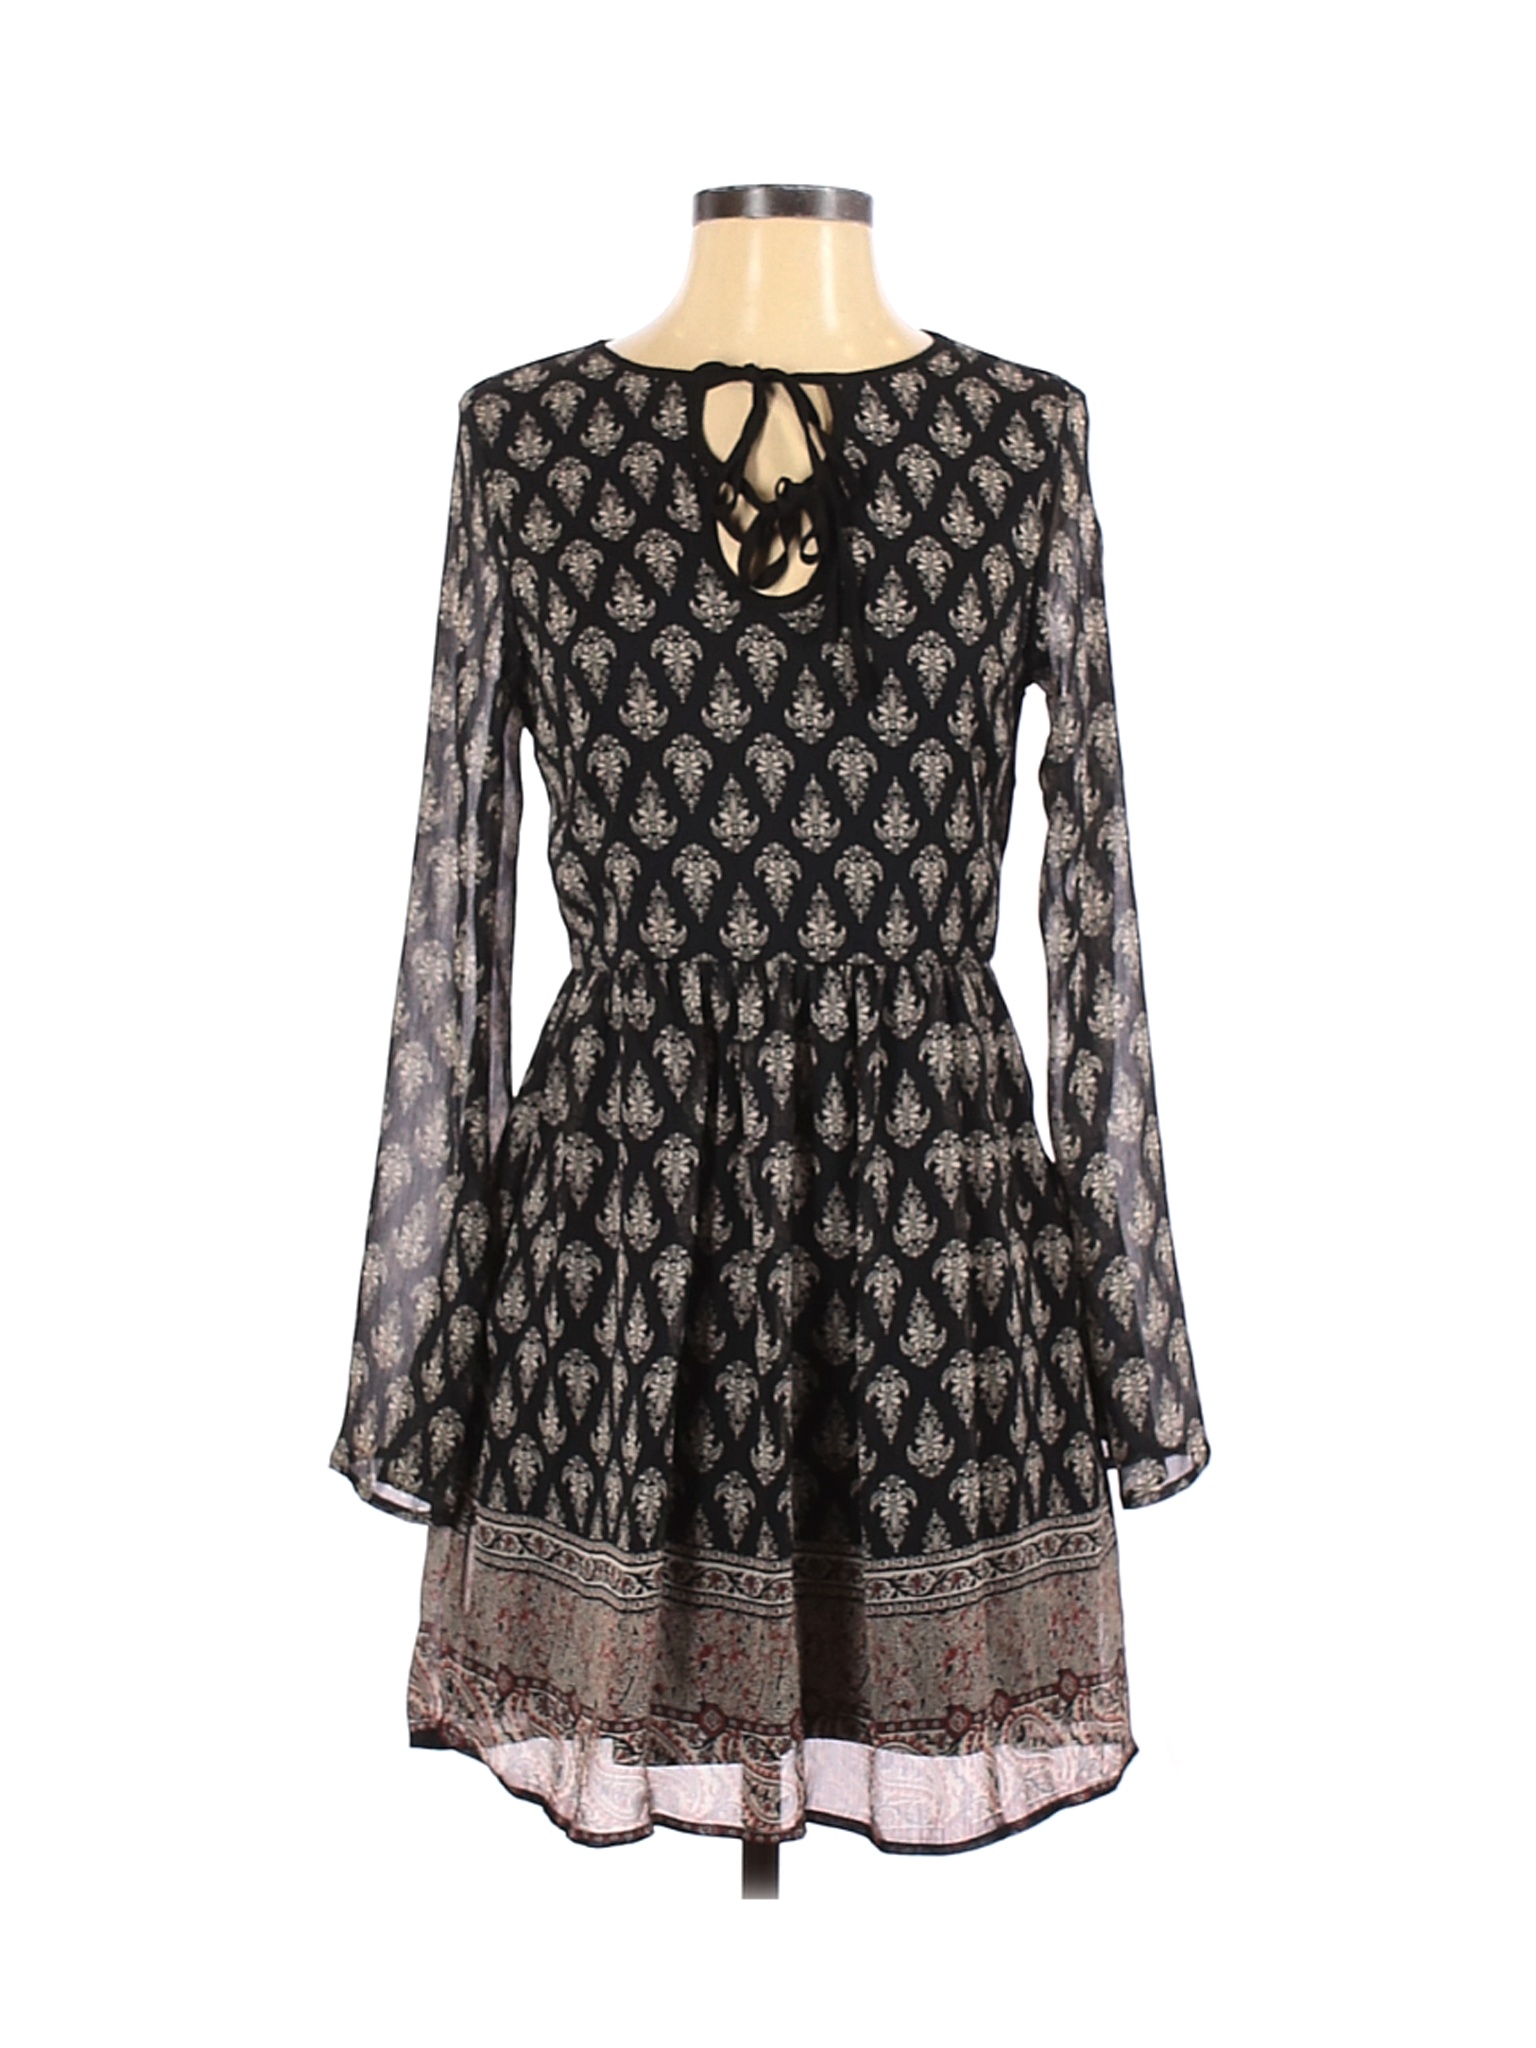 Xhilaration Women Black Casual Dress S | eBay